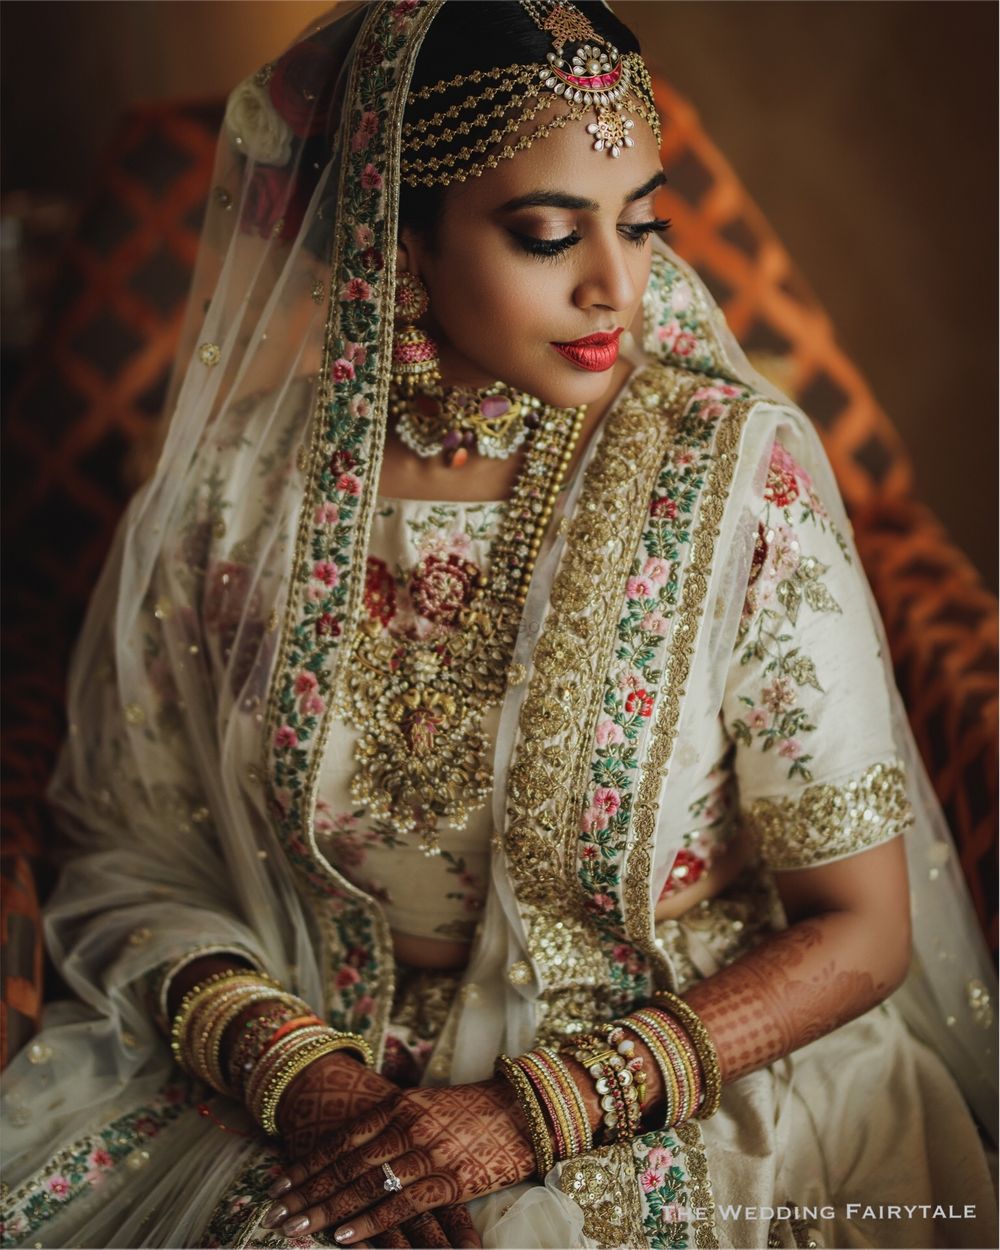 Photo of Bride in white lehenga and unique jewellery